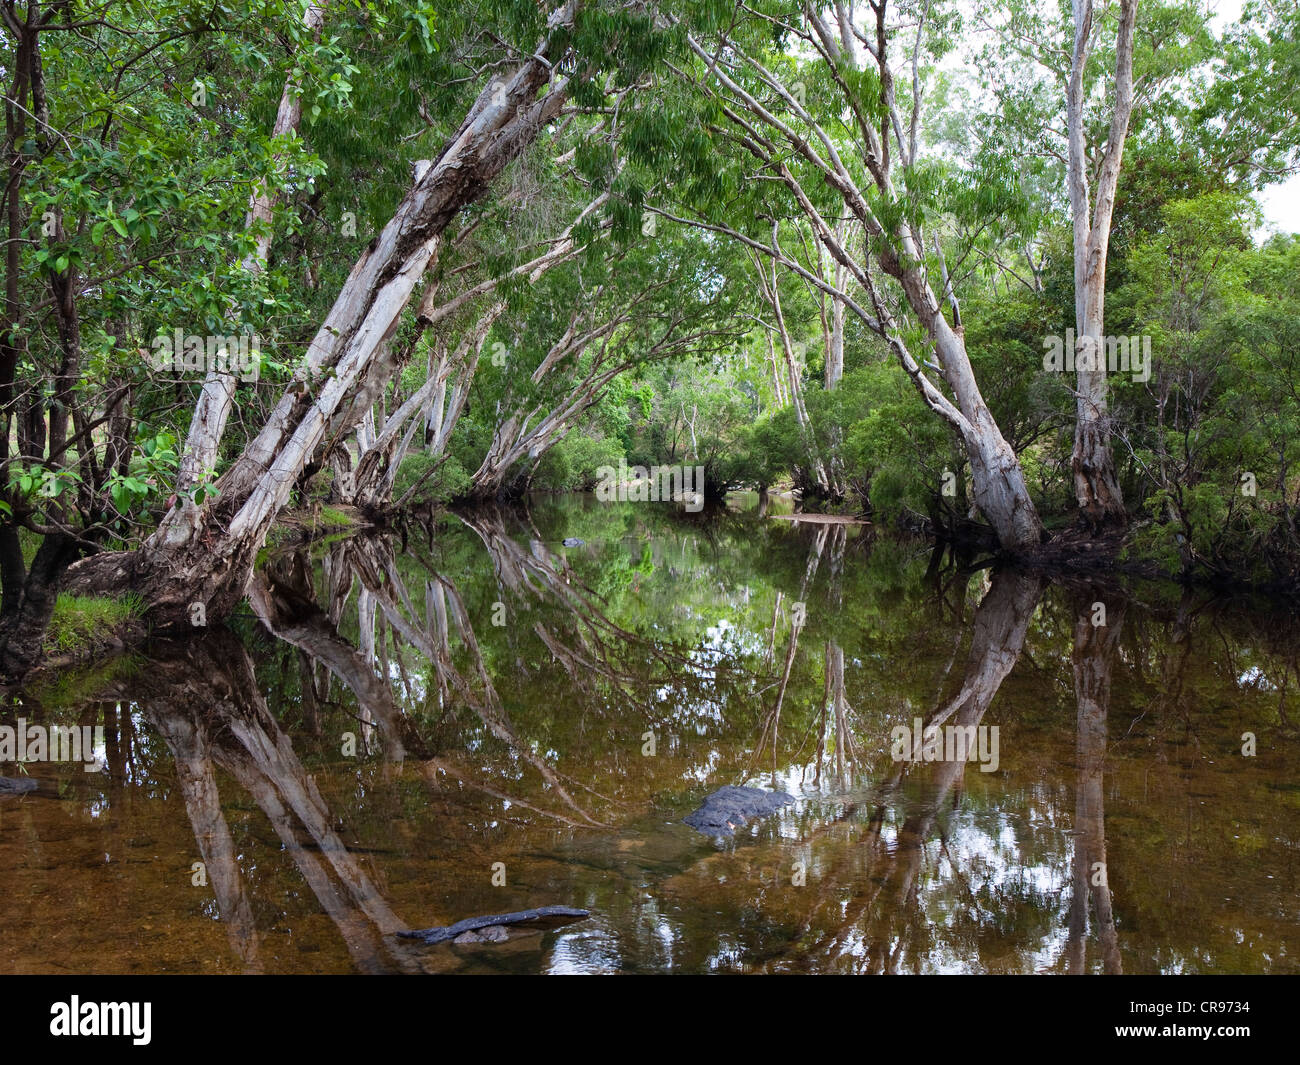 Coen River with Paperbark Trees (Melaleuca sp.), Cape York Peninsula, northern Queensland, Australia Stock Photo